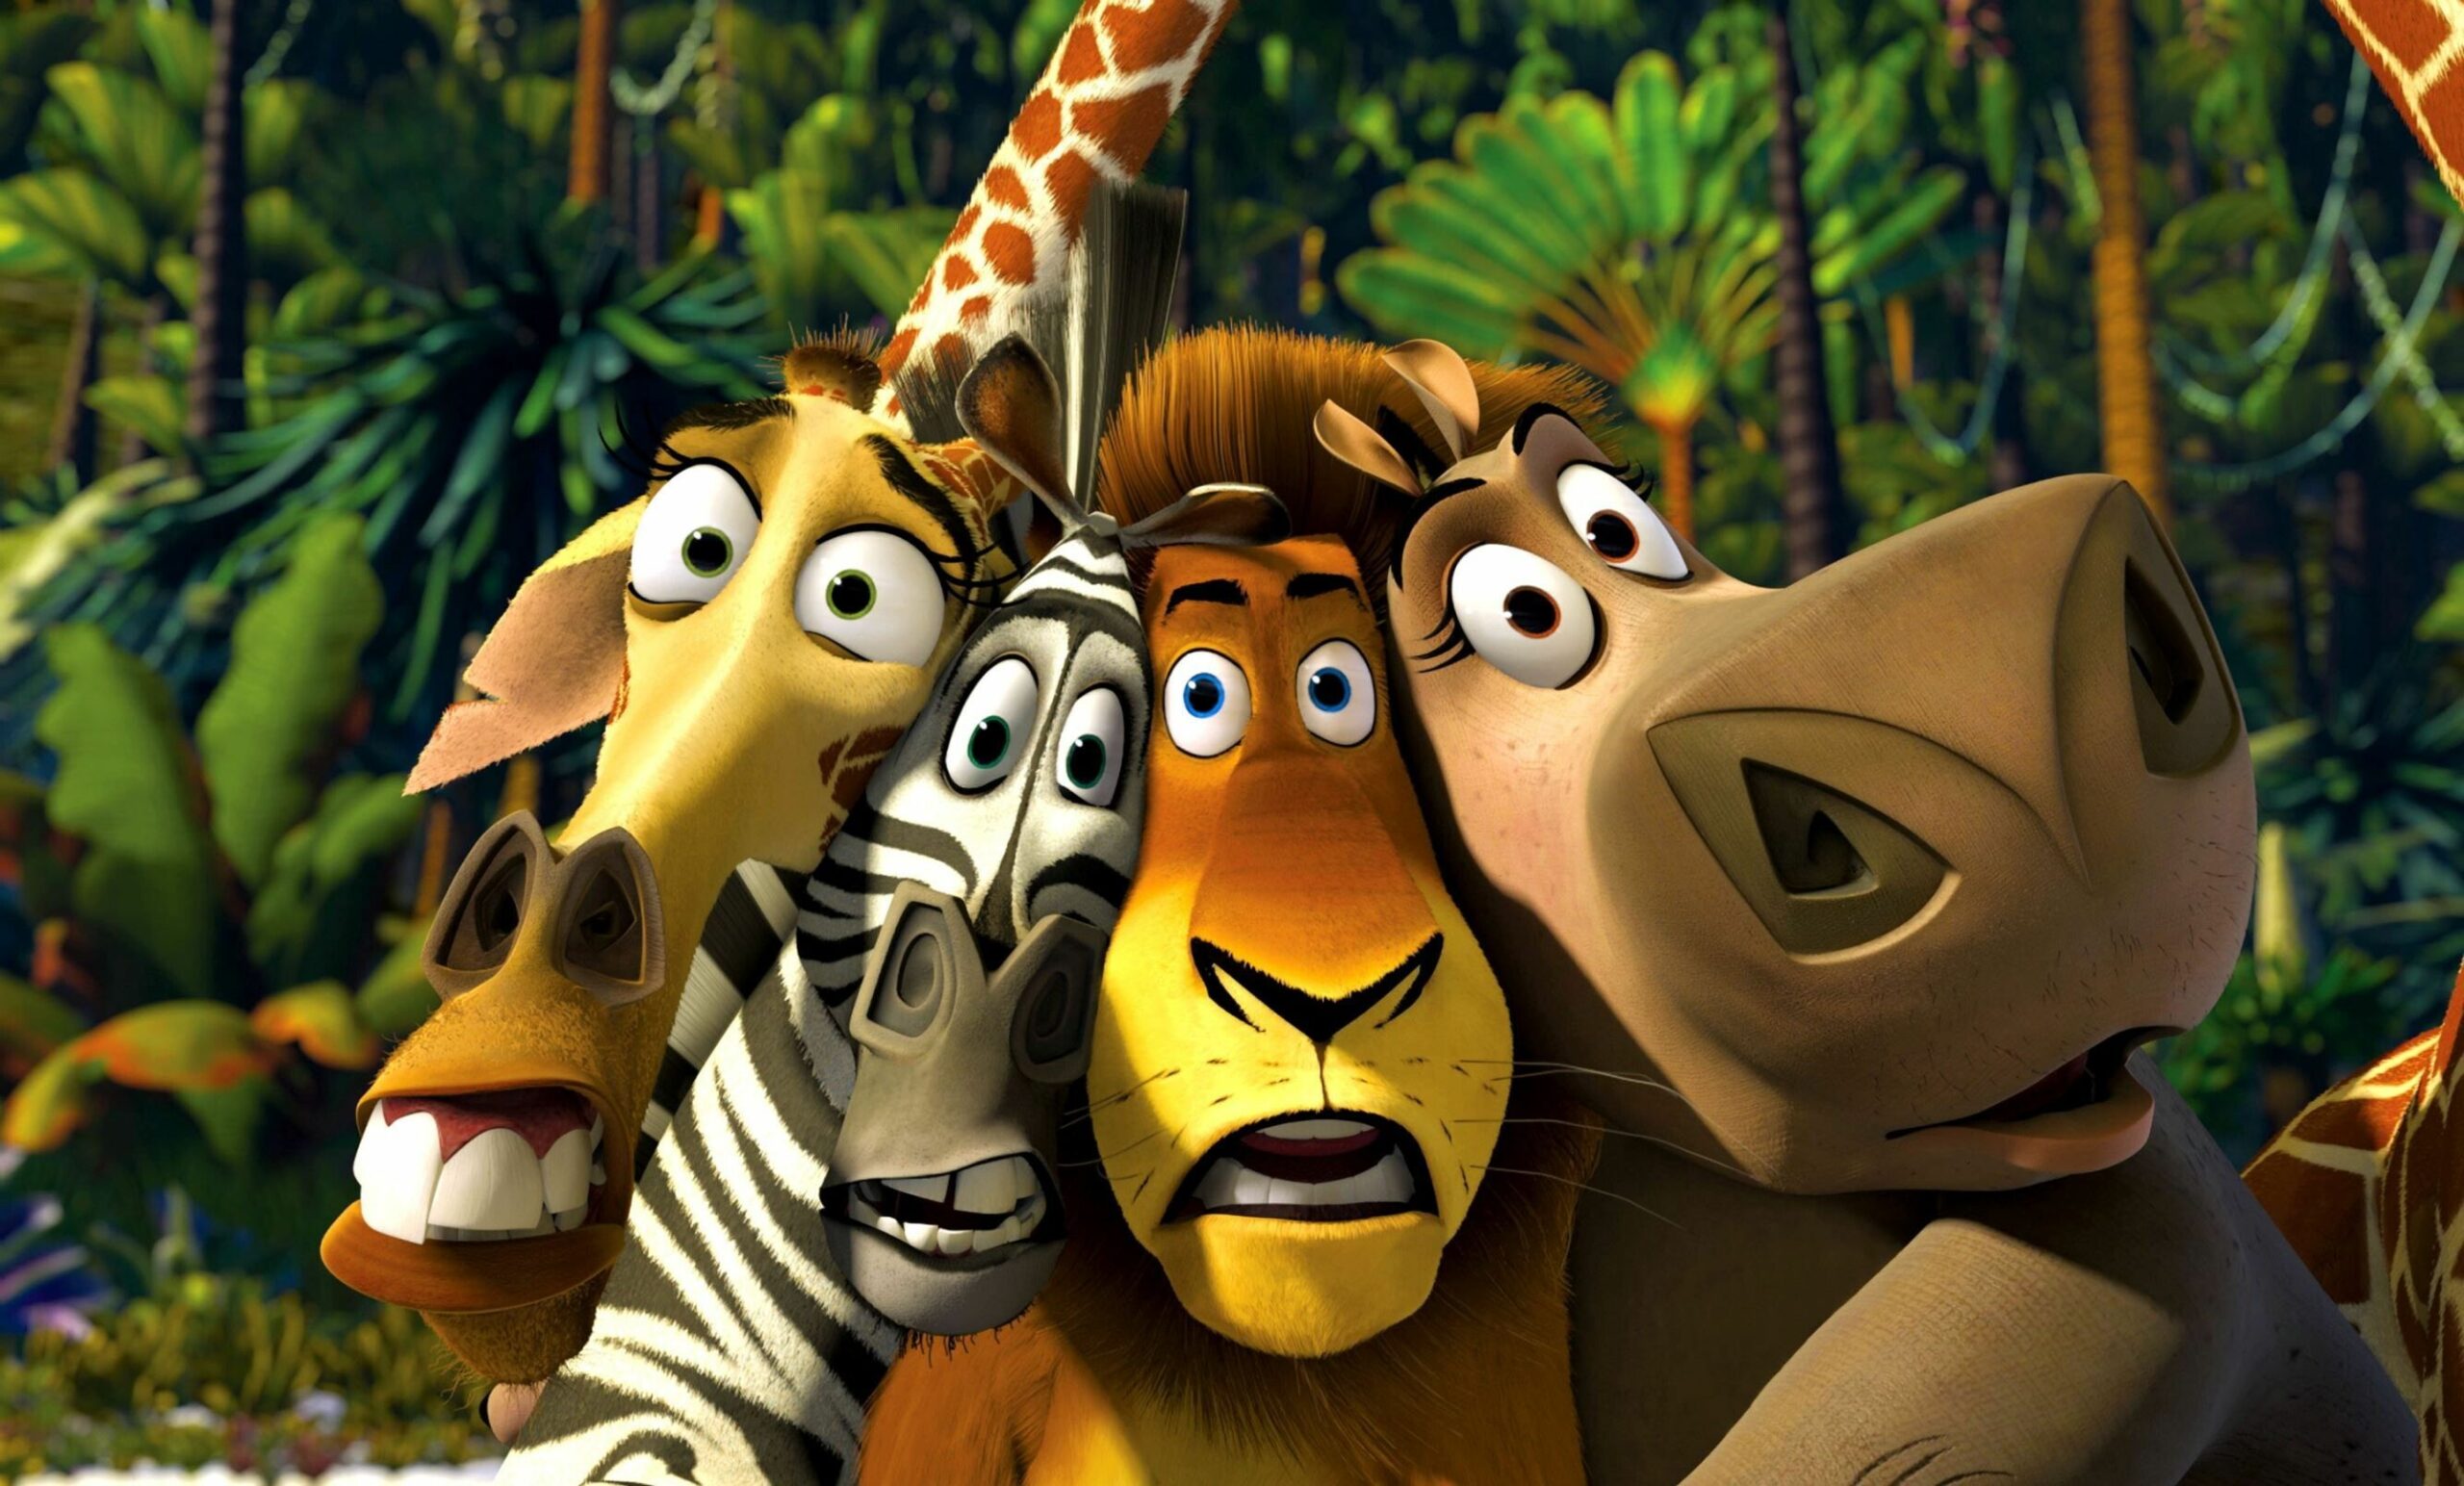 The Mesmerizing World of "Madagascar": A DreamWorks Animation Classic